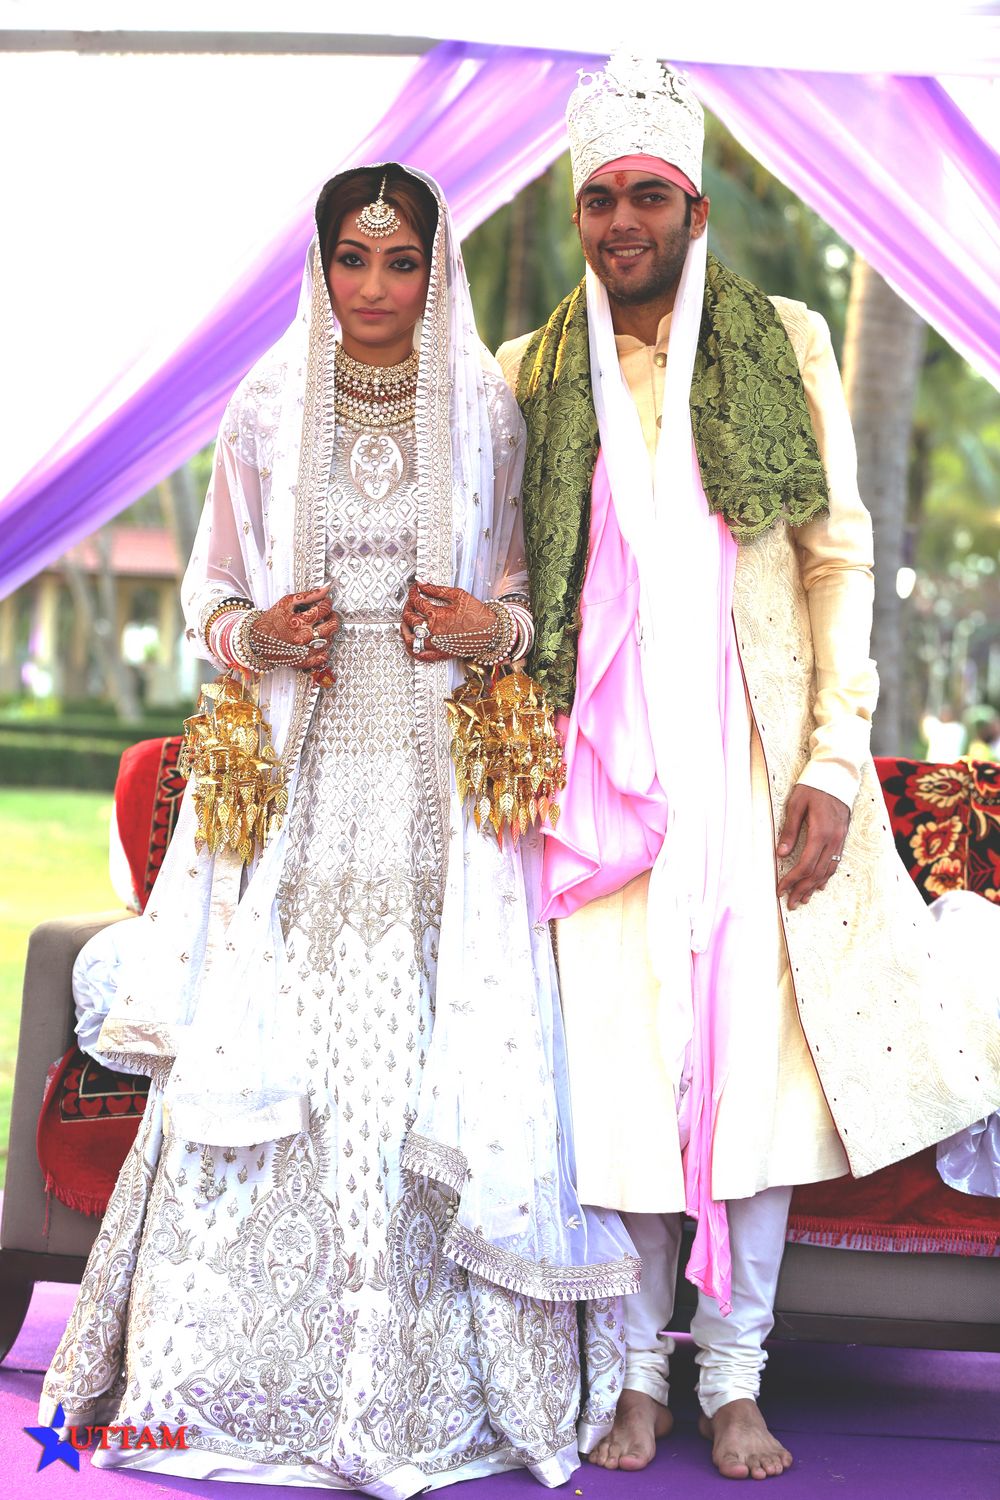 Photo From Mohit & Ritu - By Uttam Wedding Photography